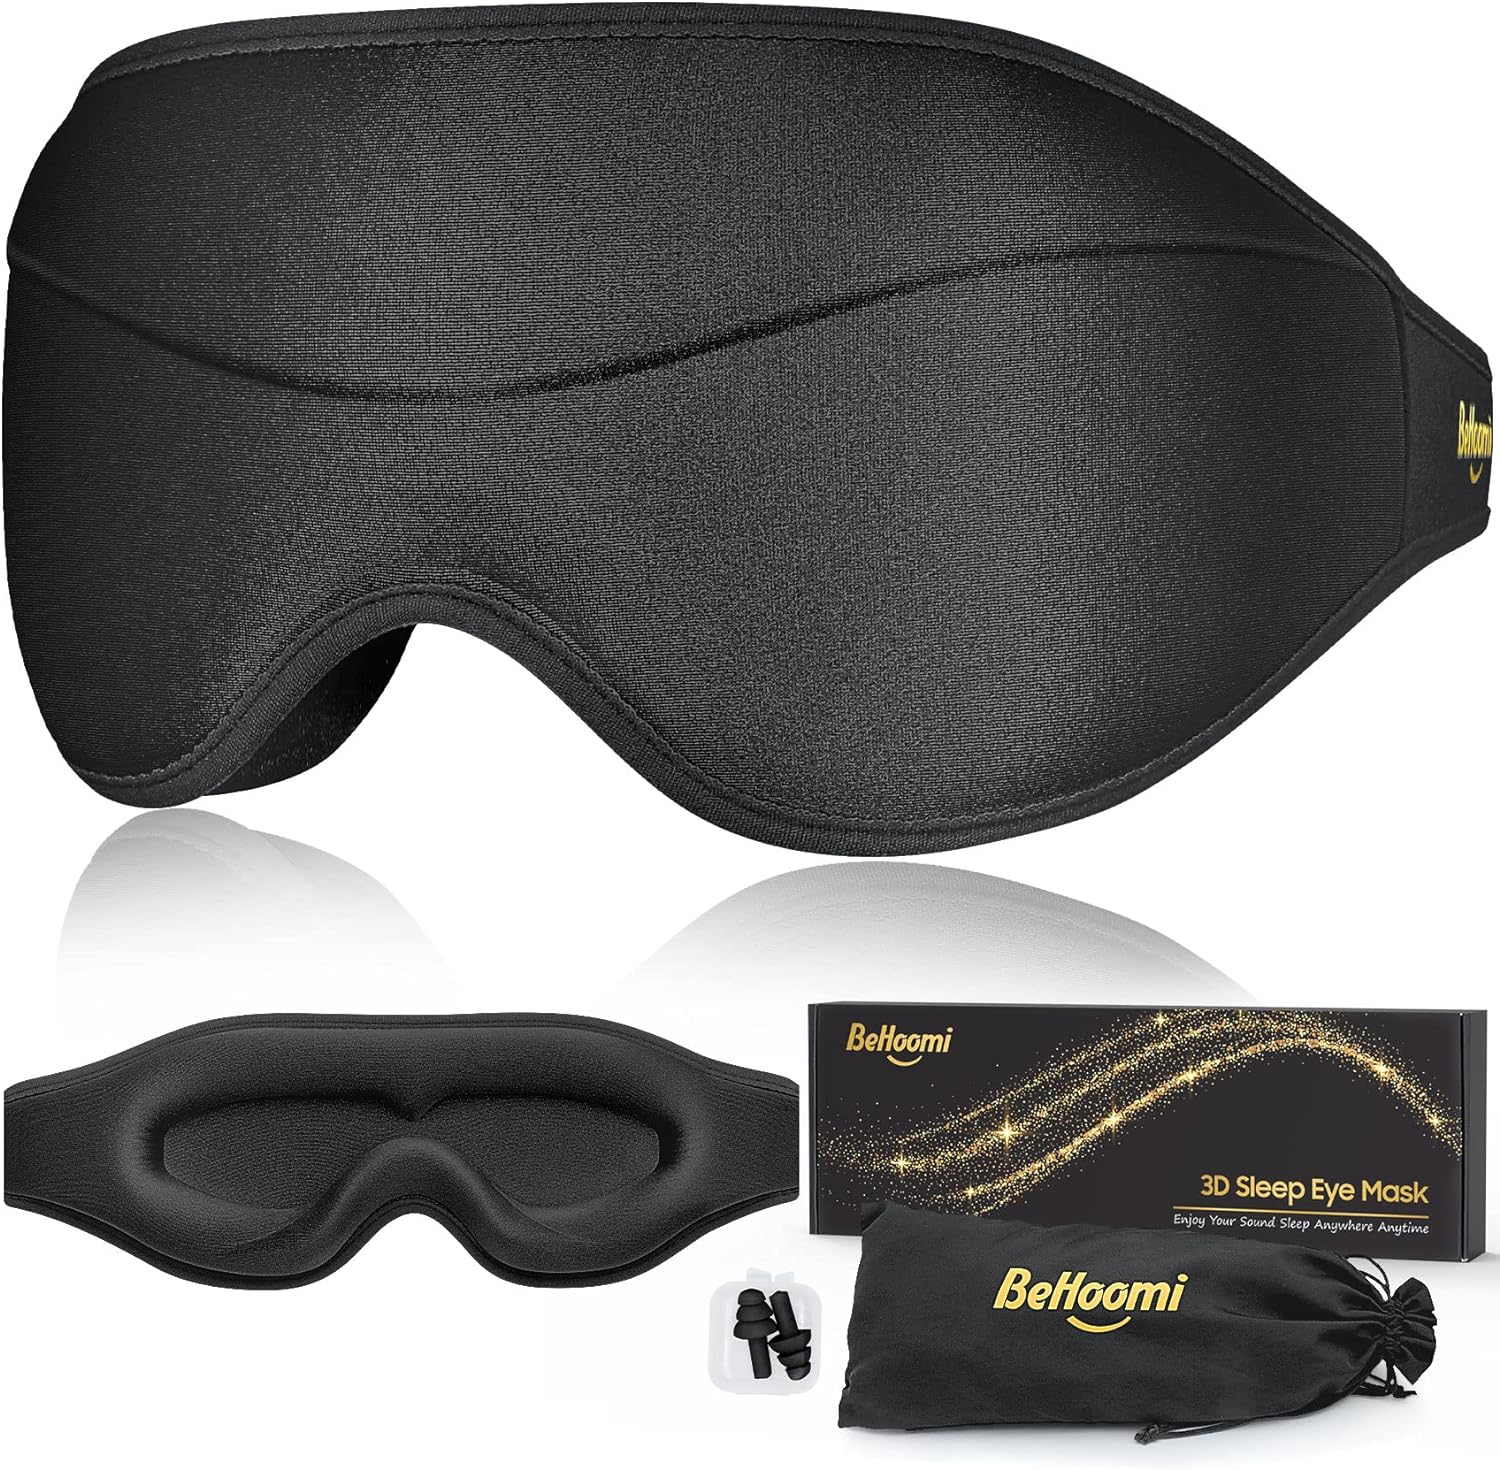 Sleep Mask, Premium Eye Mask for Sleeping, Total Blackout, Superior Soft Comfort, Upgraded 3D Ergonomic Designed Sleeping Mask for Home, Office, Travel, Meditation, Yoga, Black